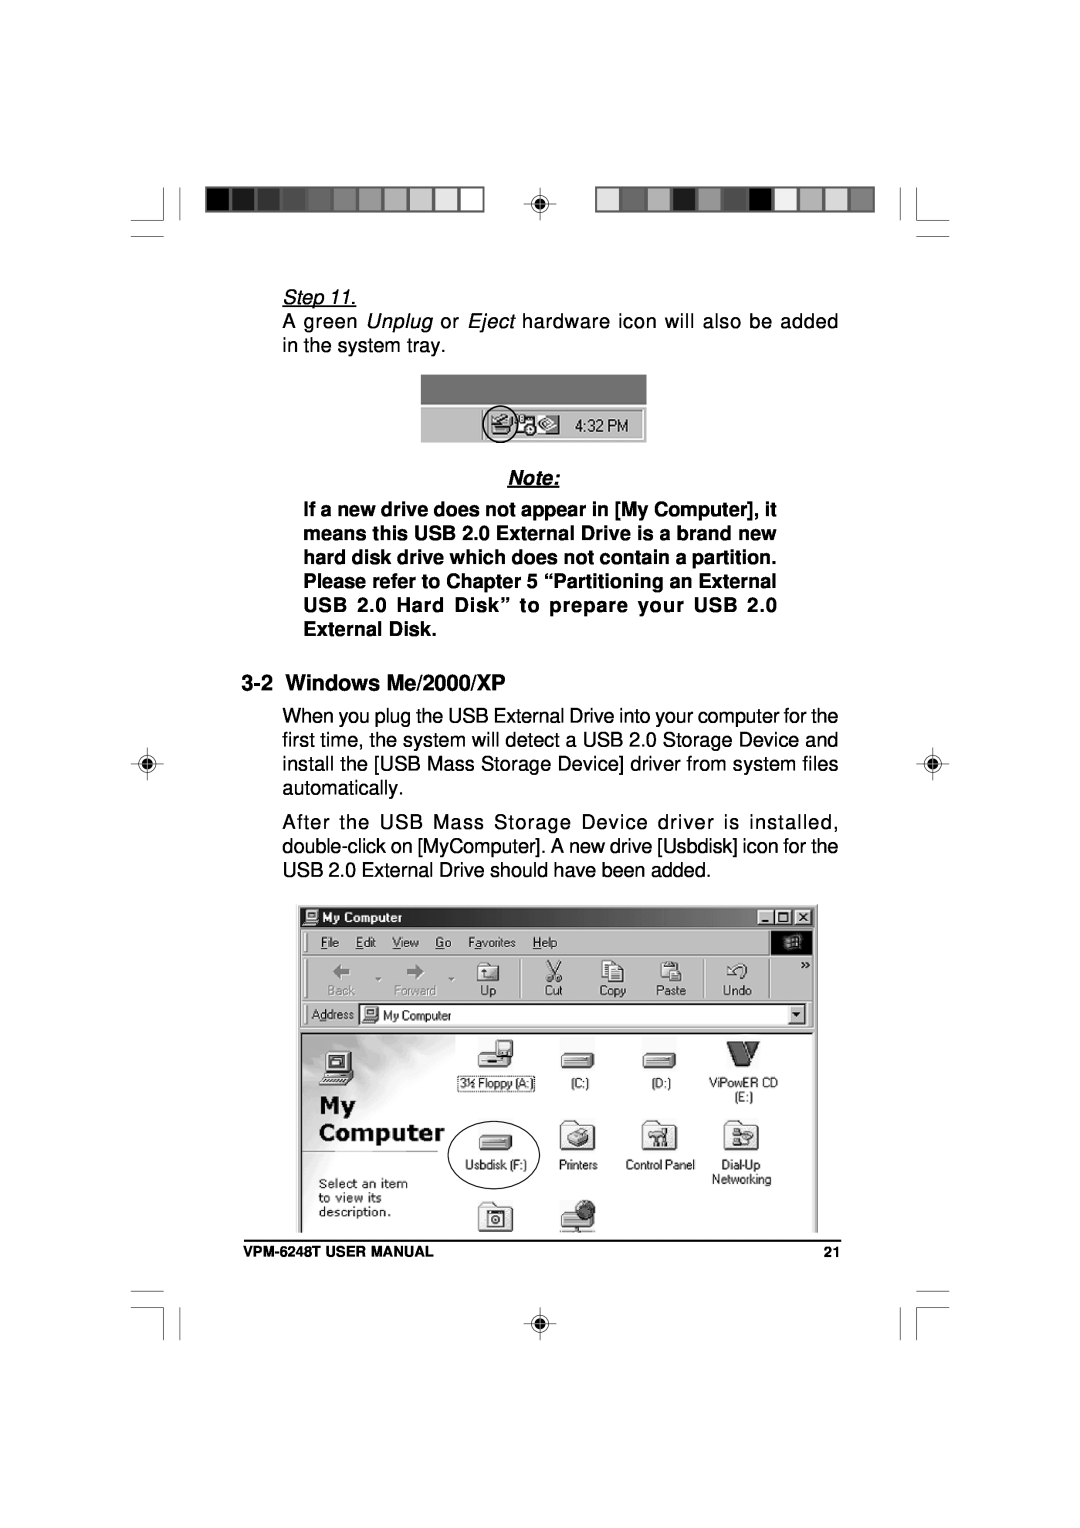 VIPowER VPM-6248T user manual Windows Me/2000/XP, Step 